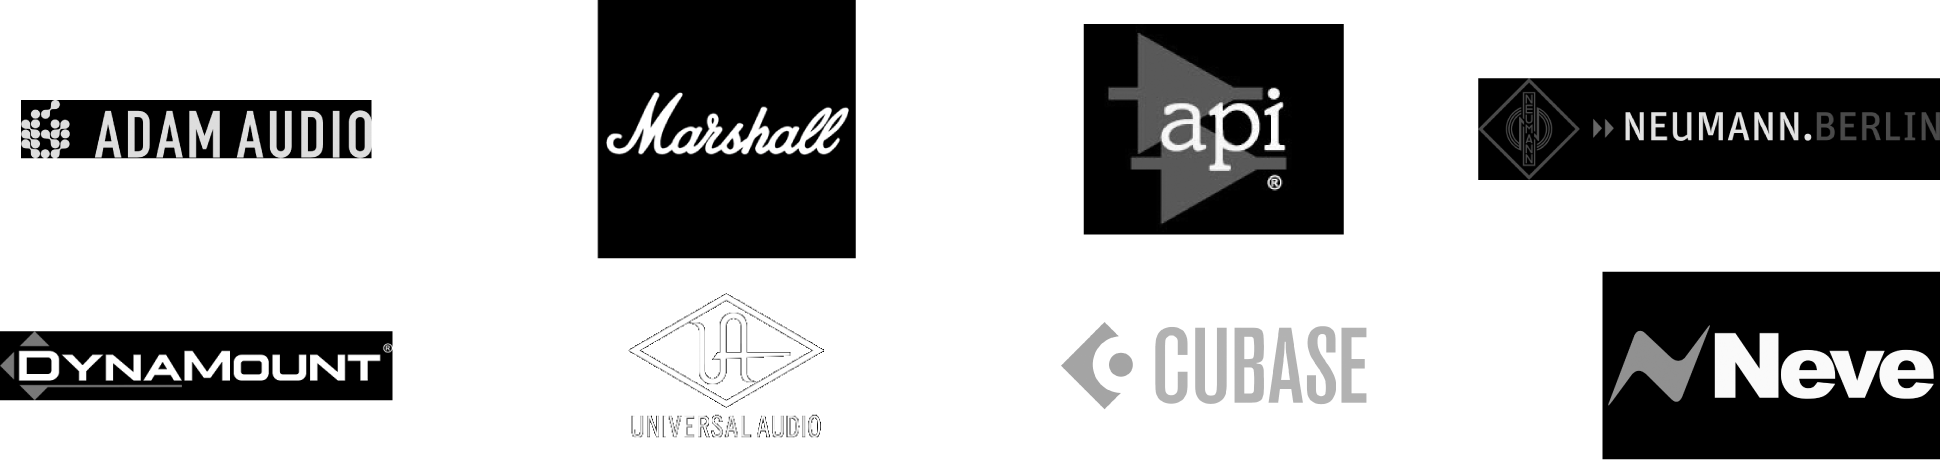 Audio logos